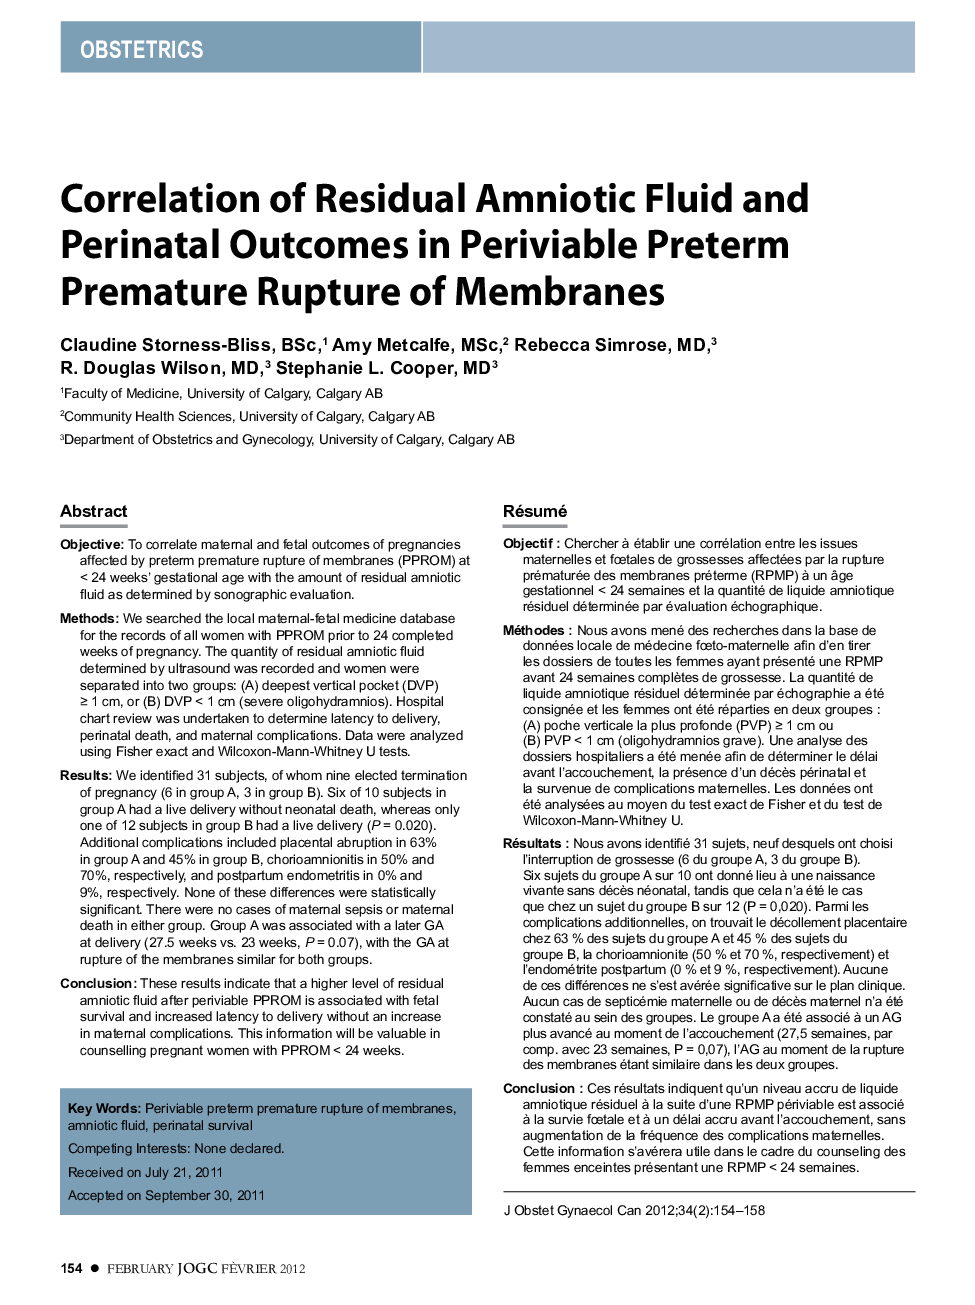 Correlation of Residual Amniotic Fluid and Perinatal Outcomes in Periviable Preterm Premature Rupture of Membranes